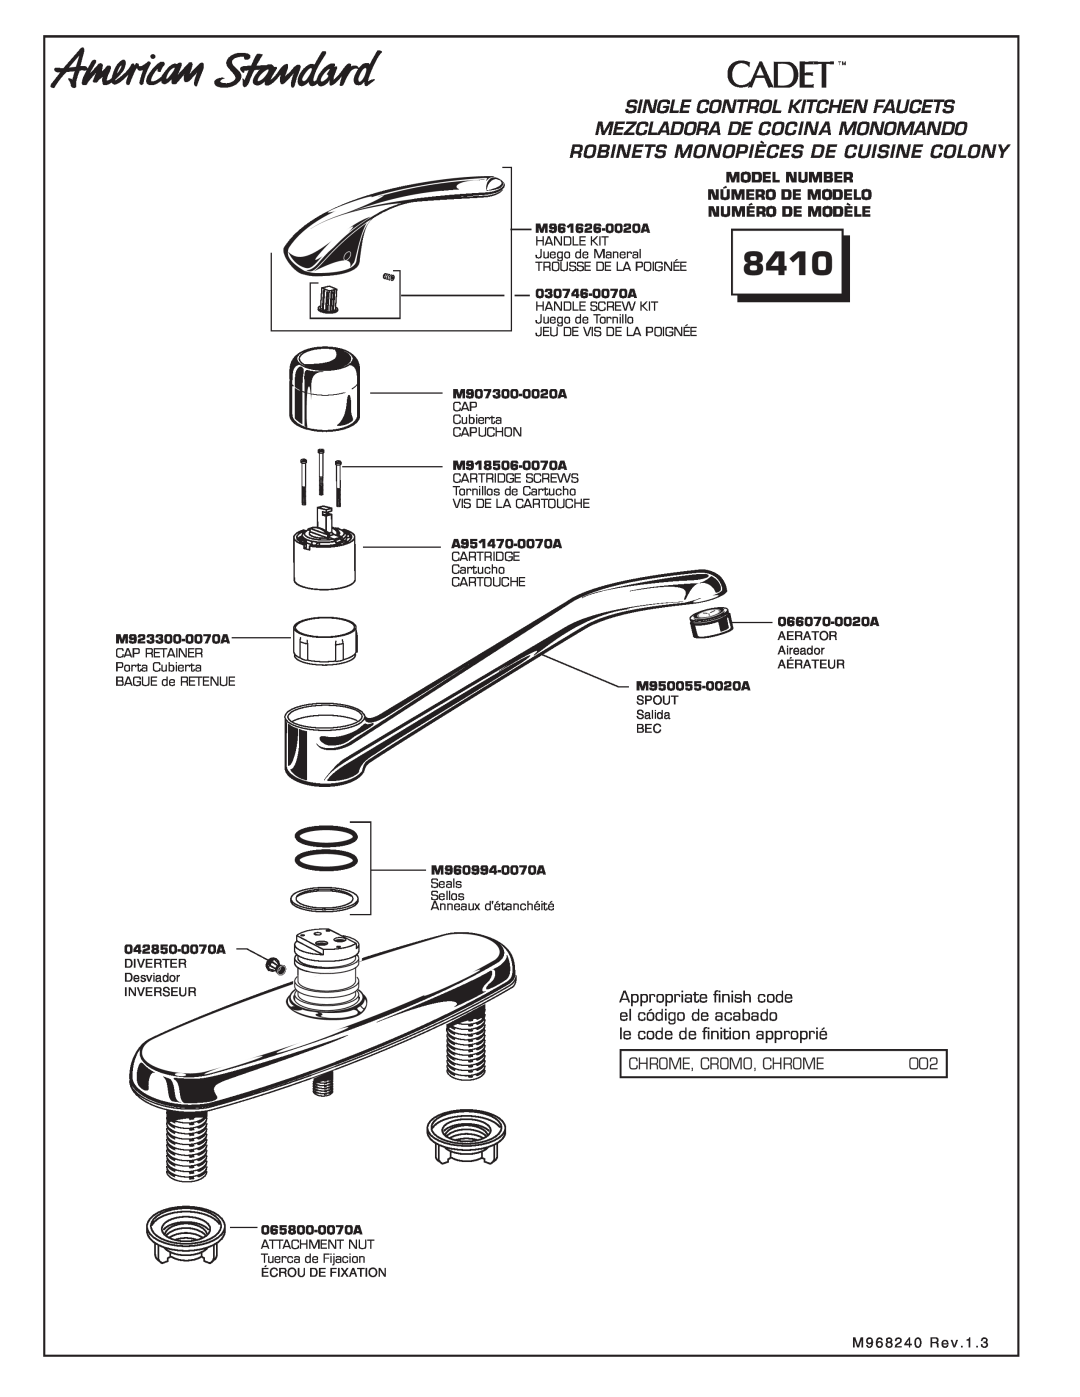 American Standard 8410 manual Single Control Kitchen Faucets, Mezcladora De Cocina Monomando, Appropriate ﬁnish code 